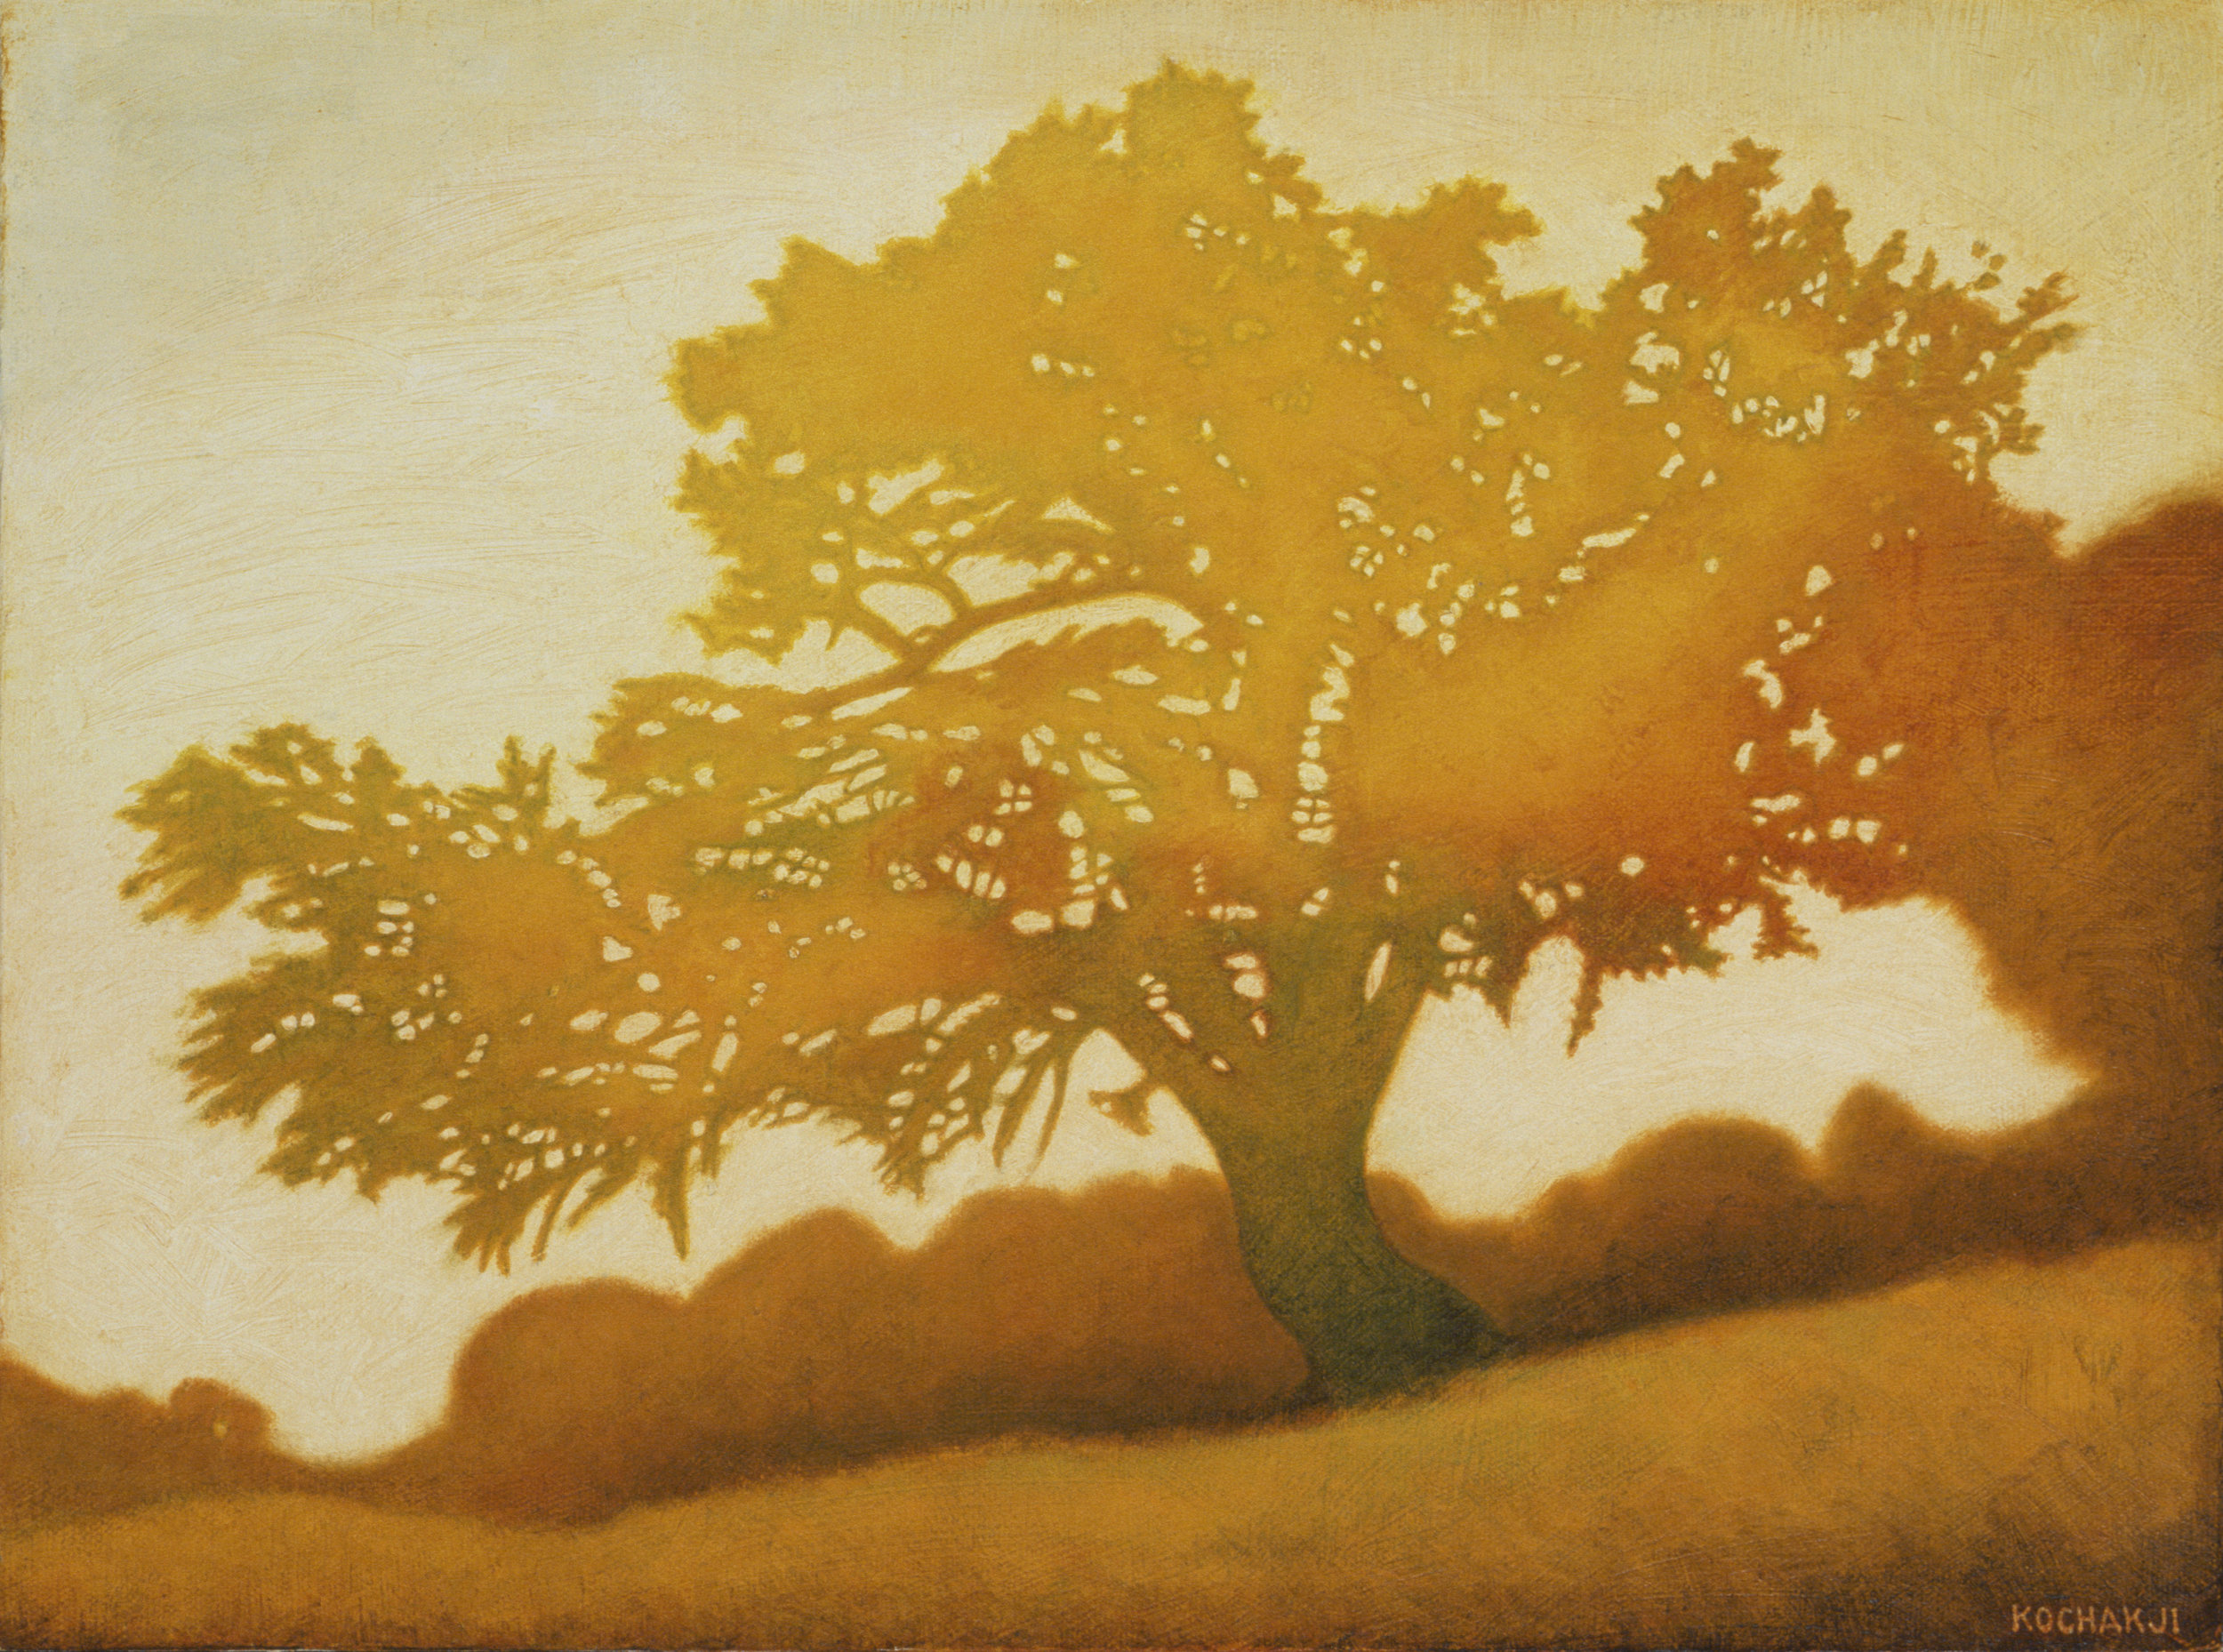 The Golden Oak - oil on canvas - 16x12"